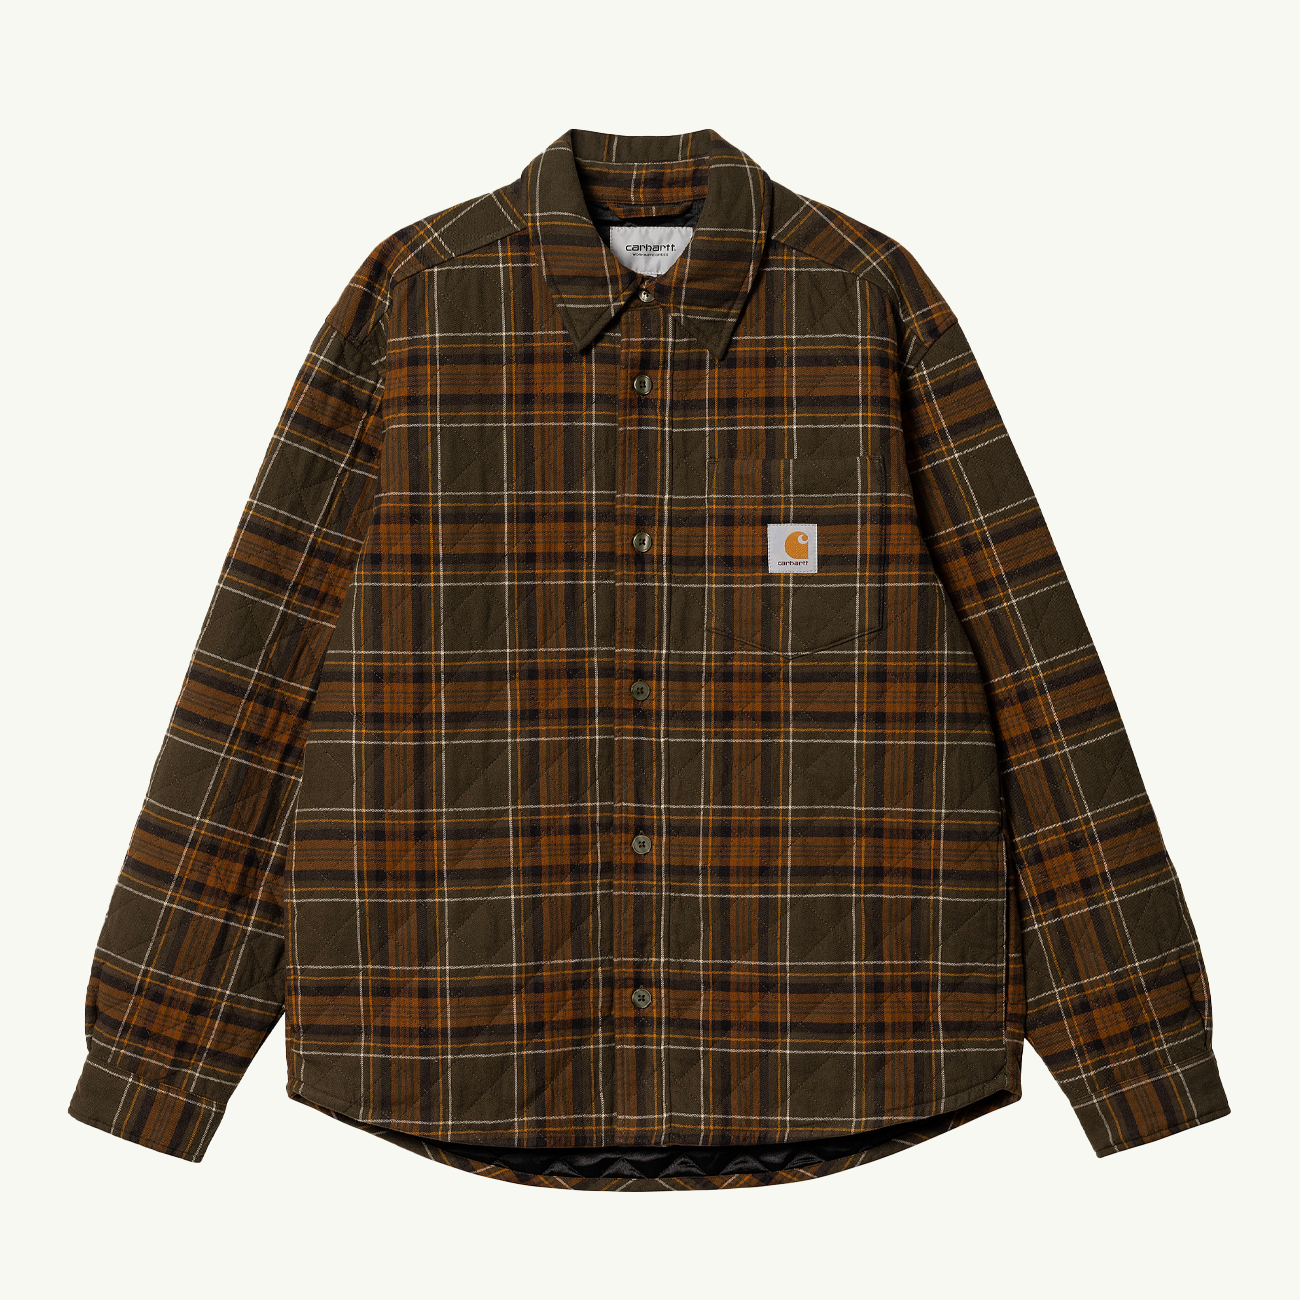 Wiles Shirt Jacket - Wiles Check/Highland